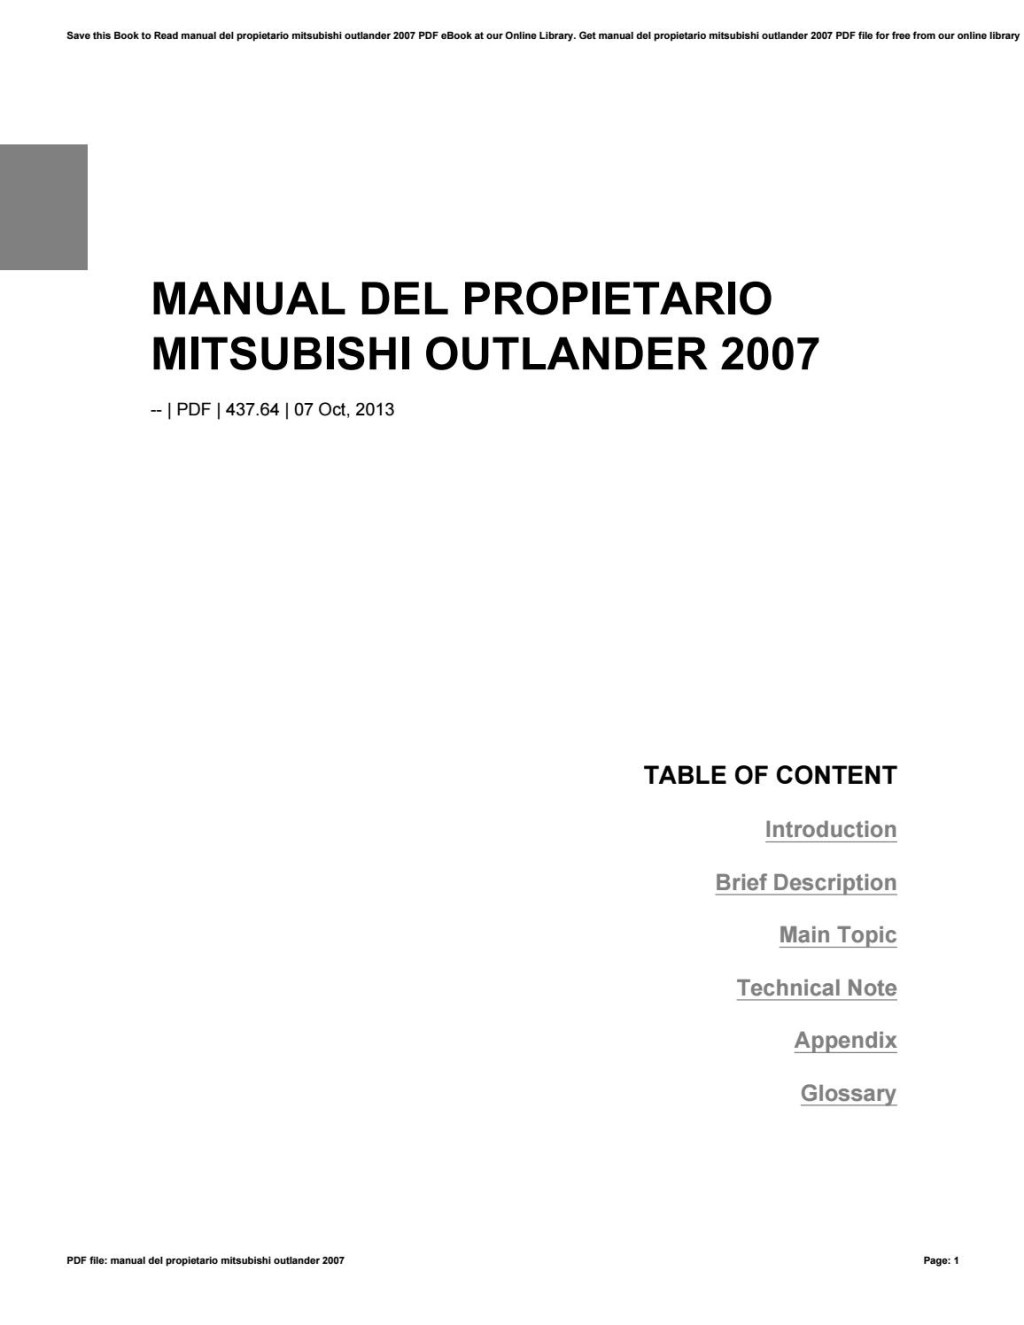 Picture of: Manual del propietario mitsubishi outlander  by hezll – Issuu